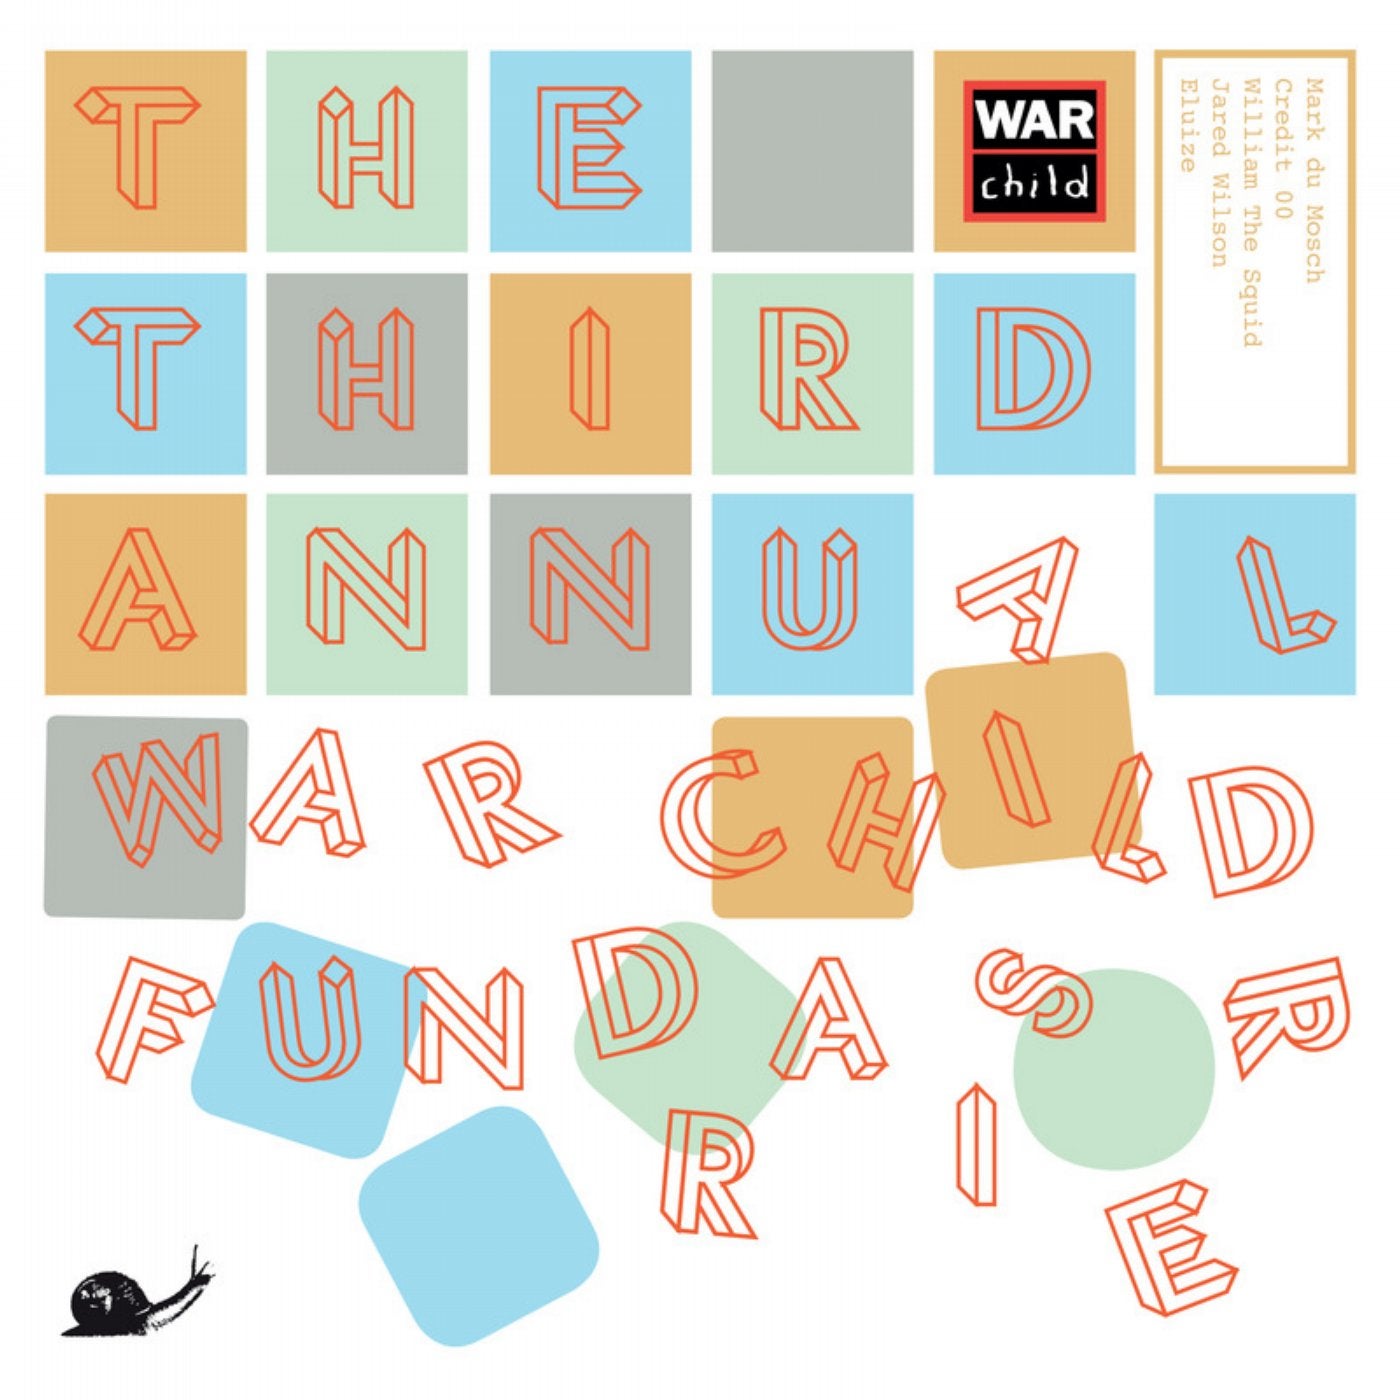 The Third Annual War Child Fundraiser (Pt. 2)